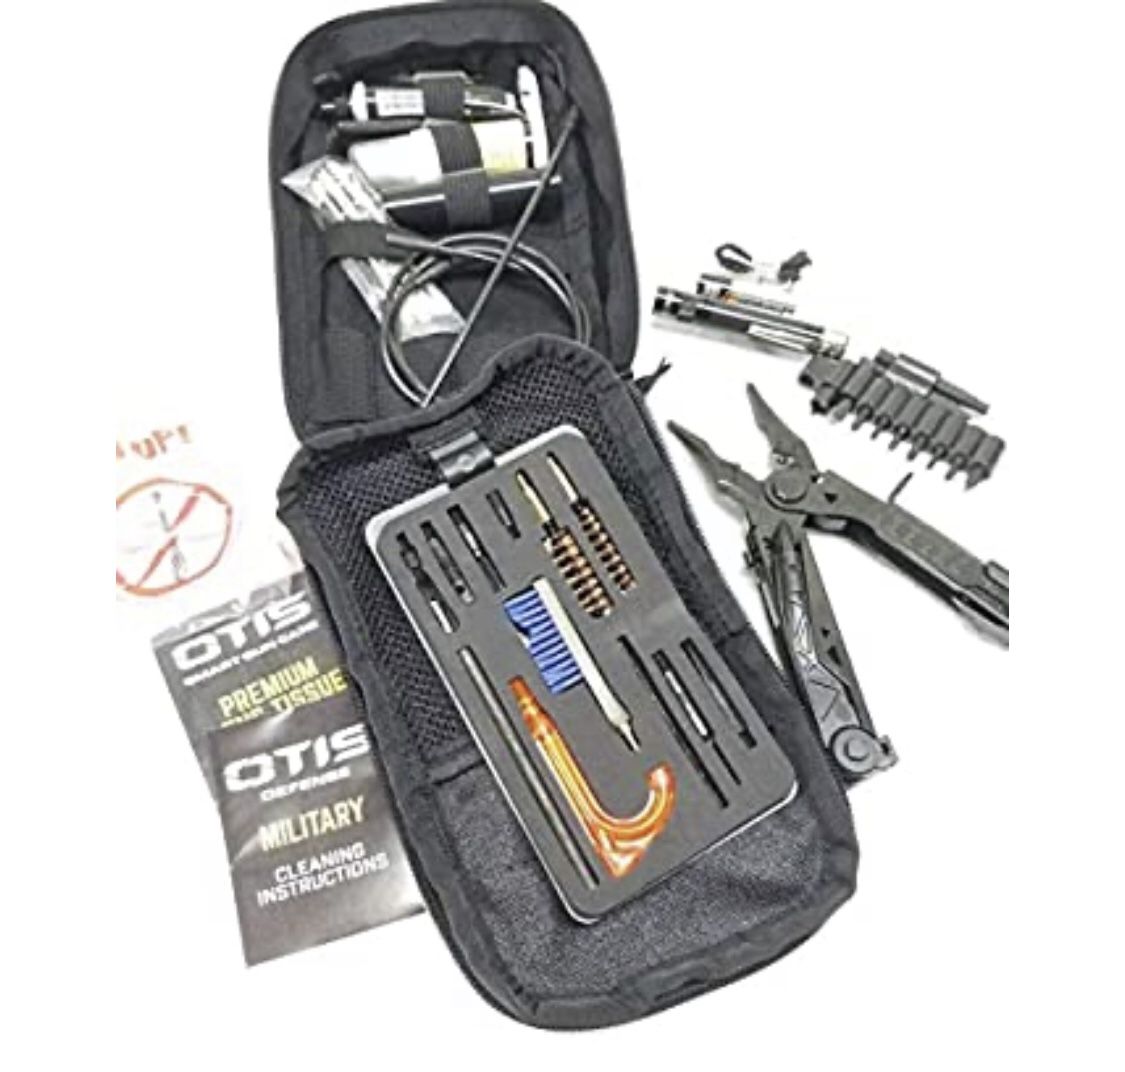 Gerber/Otis 5.56MM Soldier Tool Kit (Cleaning Kit, Gerber, Flashlight)